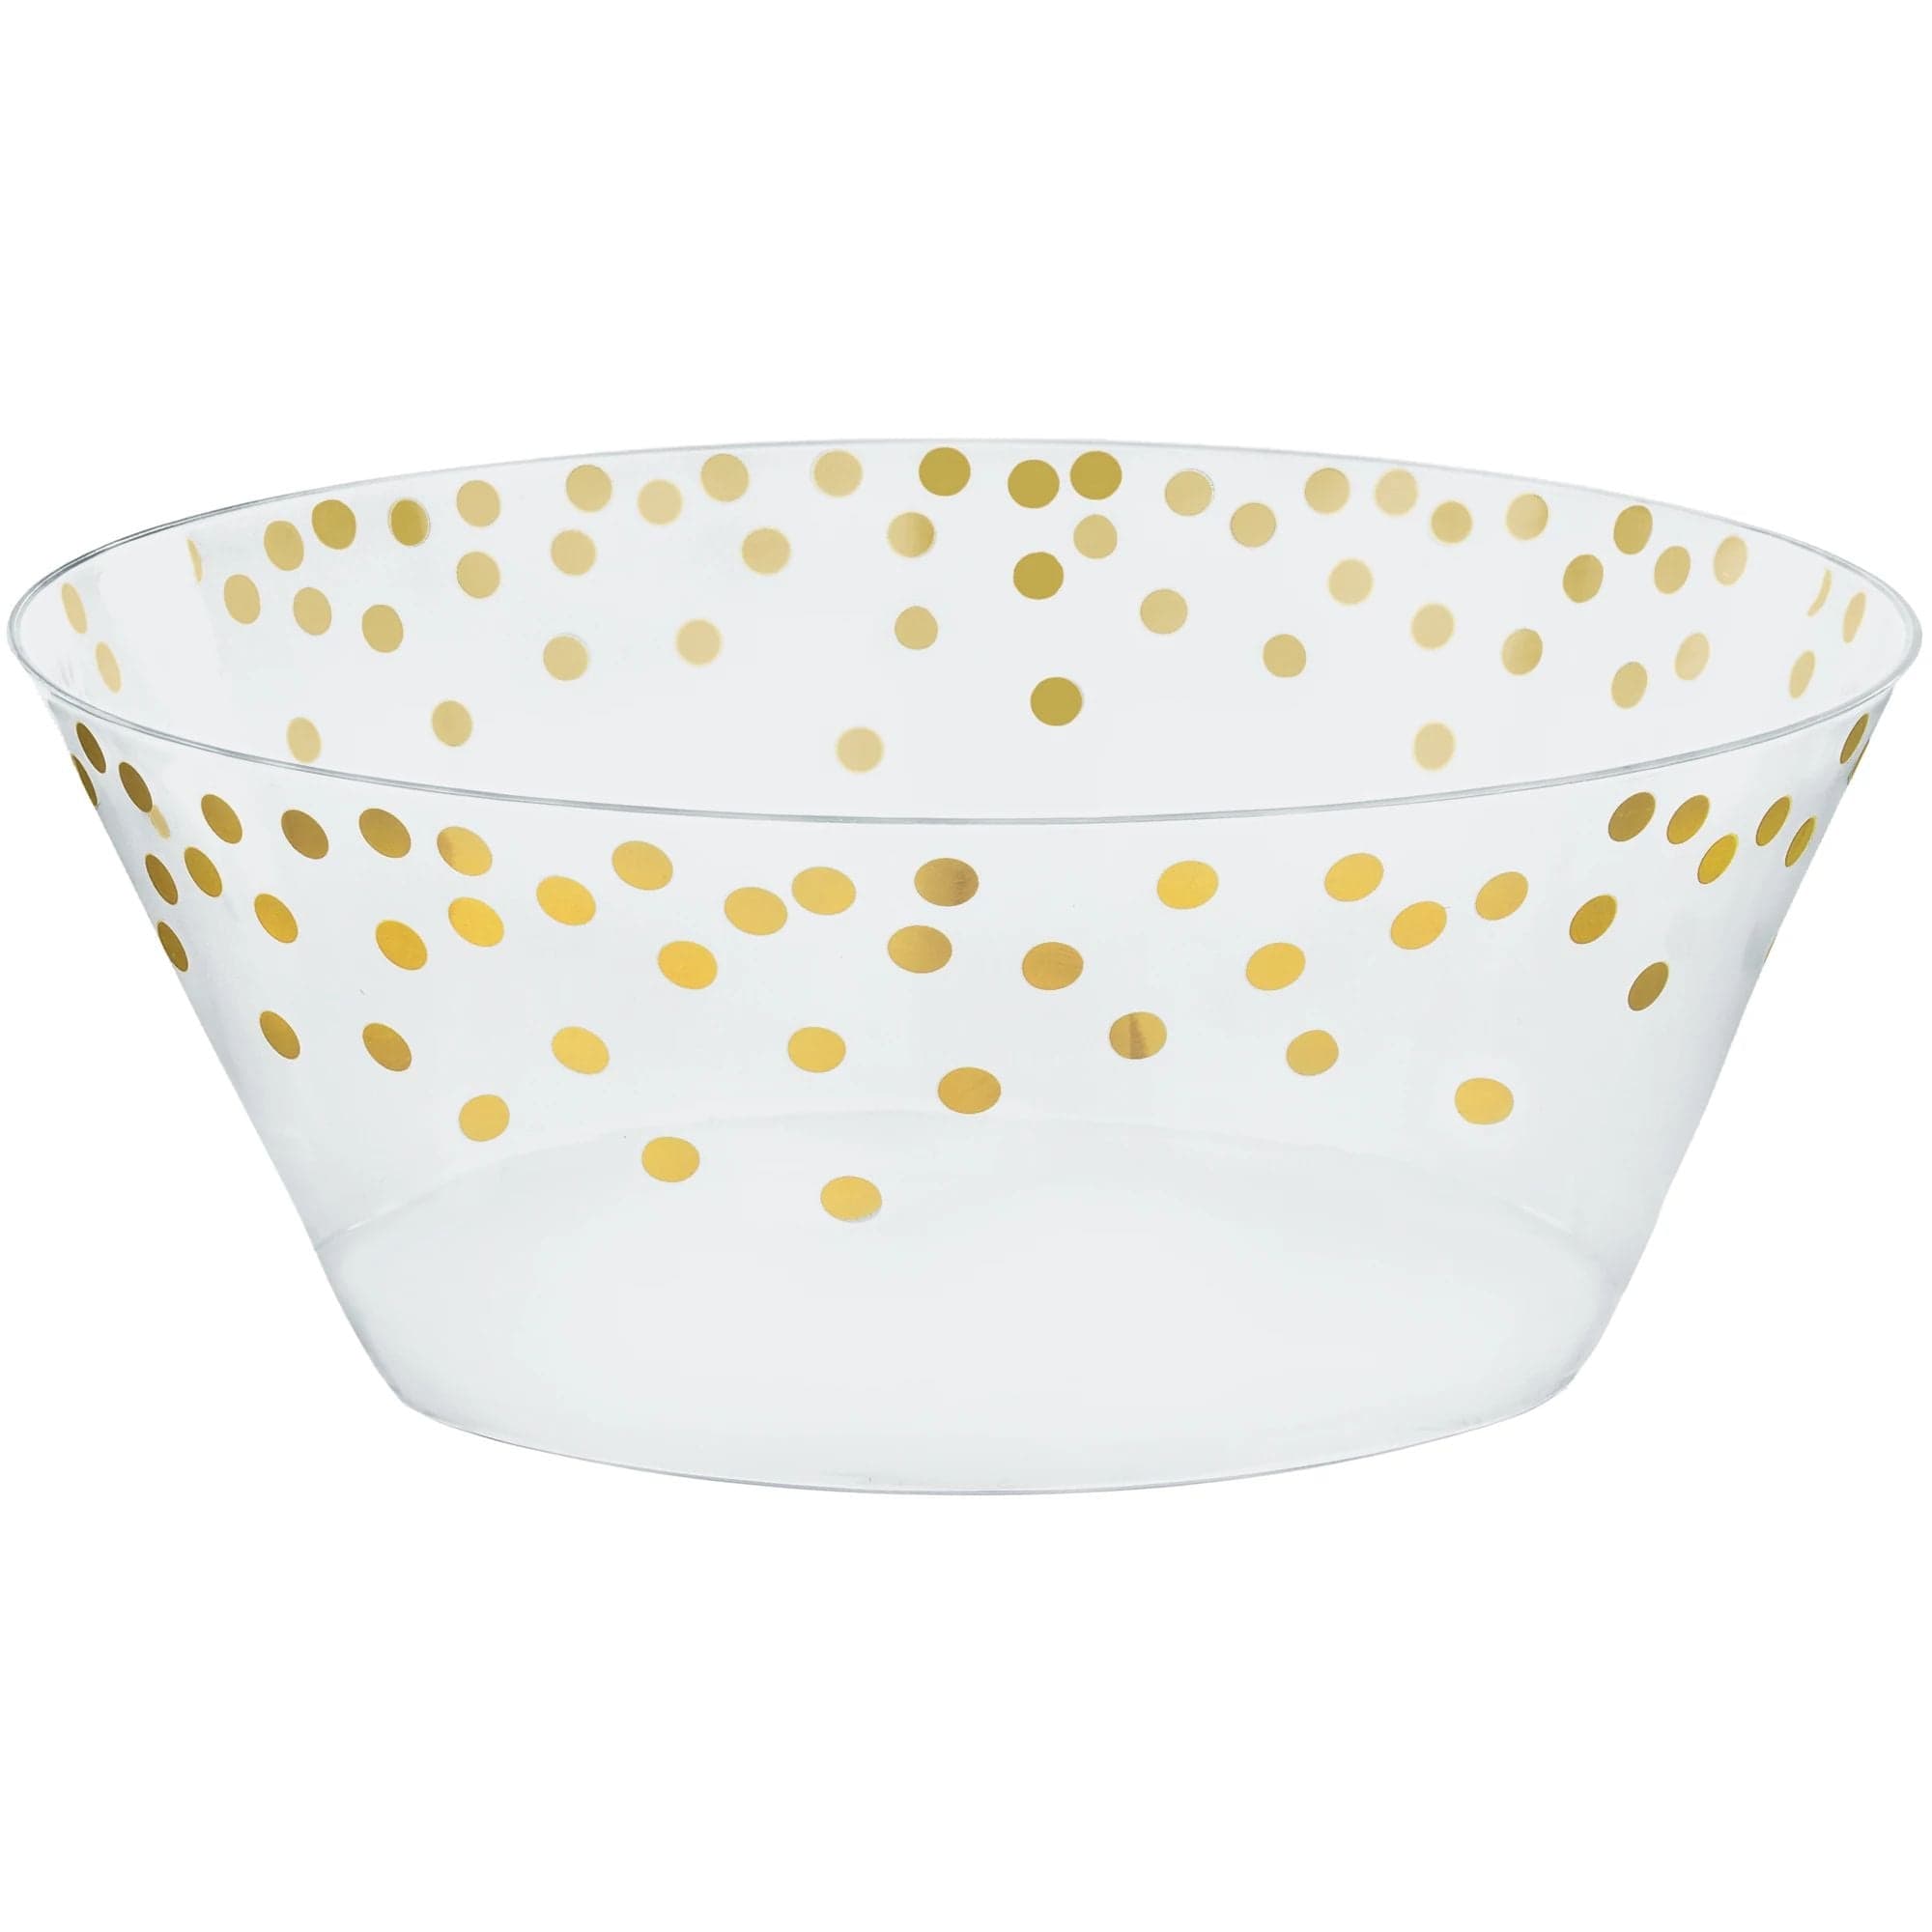 Amscan BASIC Plastic Serving Bowl Small -Gold Dots